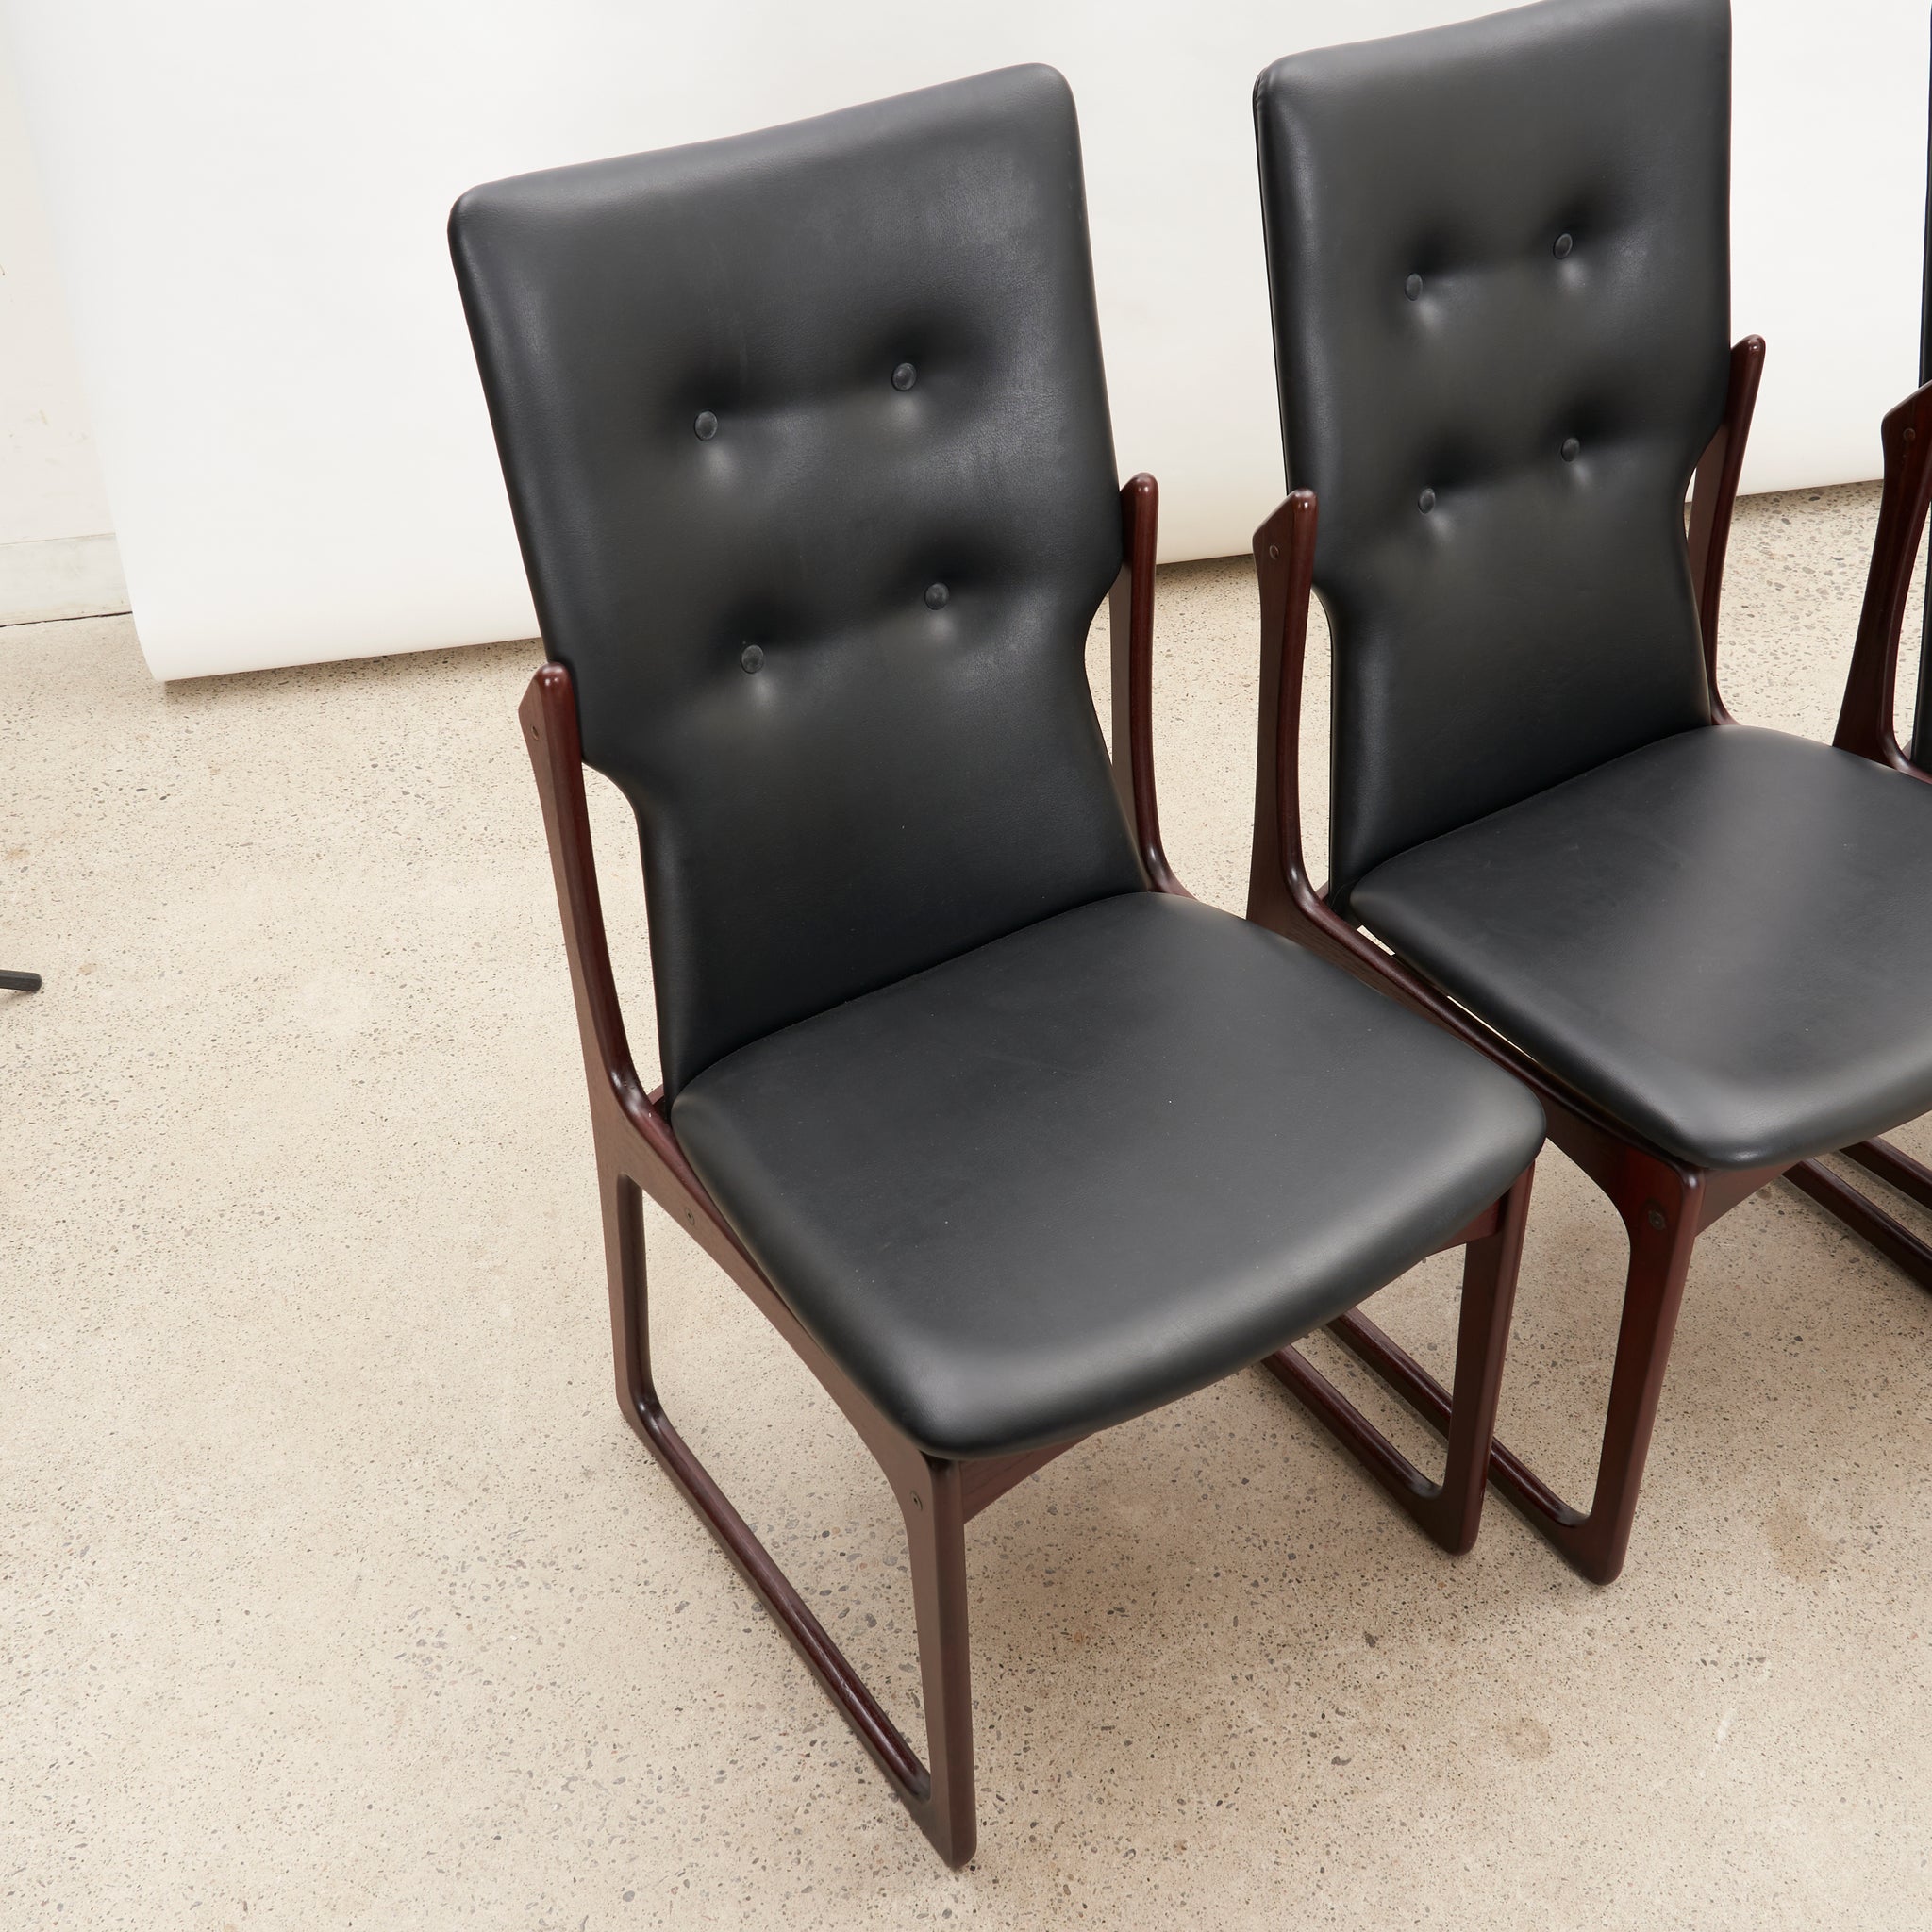 Set of 6 Danish ArtFurn Dining Chairs